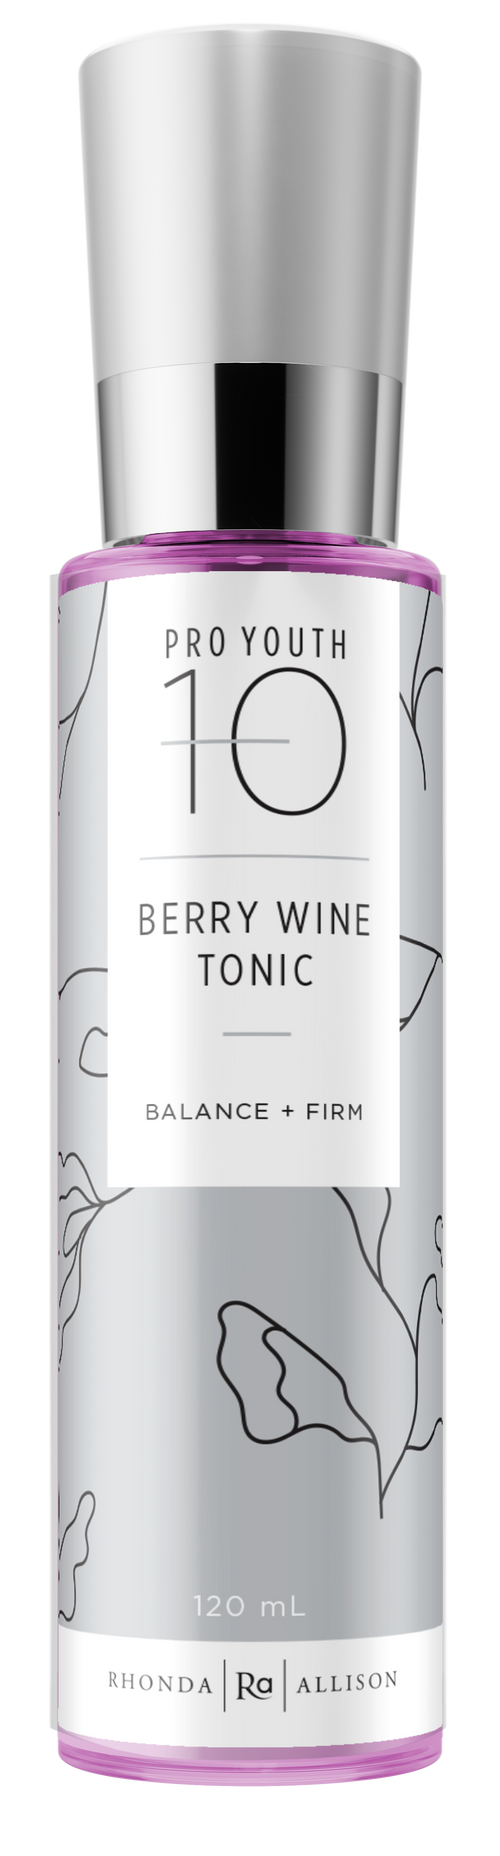 Berry Wine Tonic (Balance +firm) 120ml